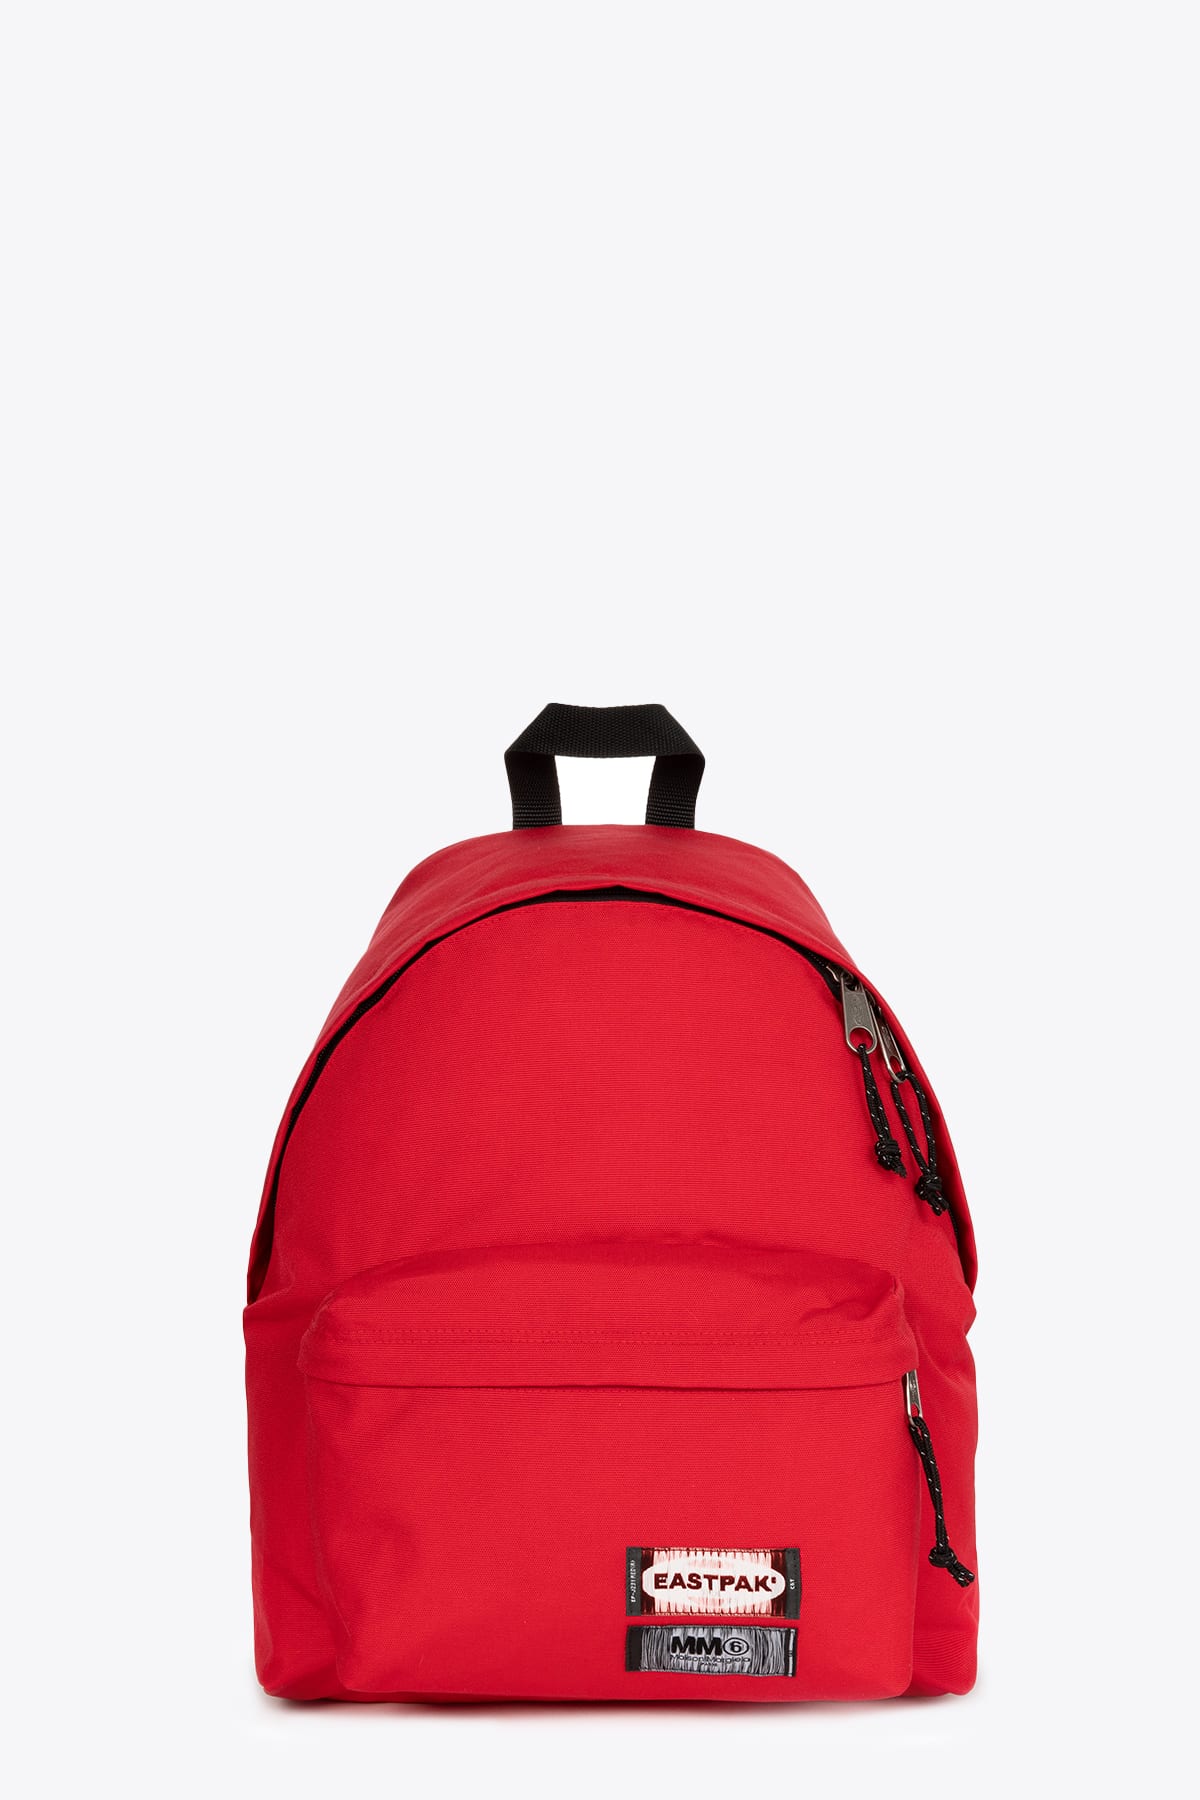 MM6 Maison Margiela Reversible Backpack Red nylon reversible backpack Eastpak collaboration